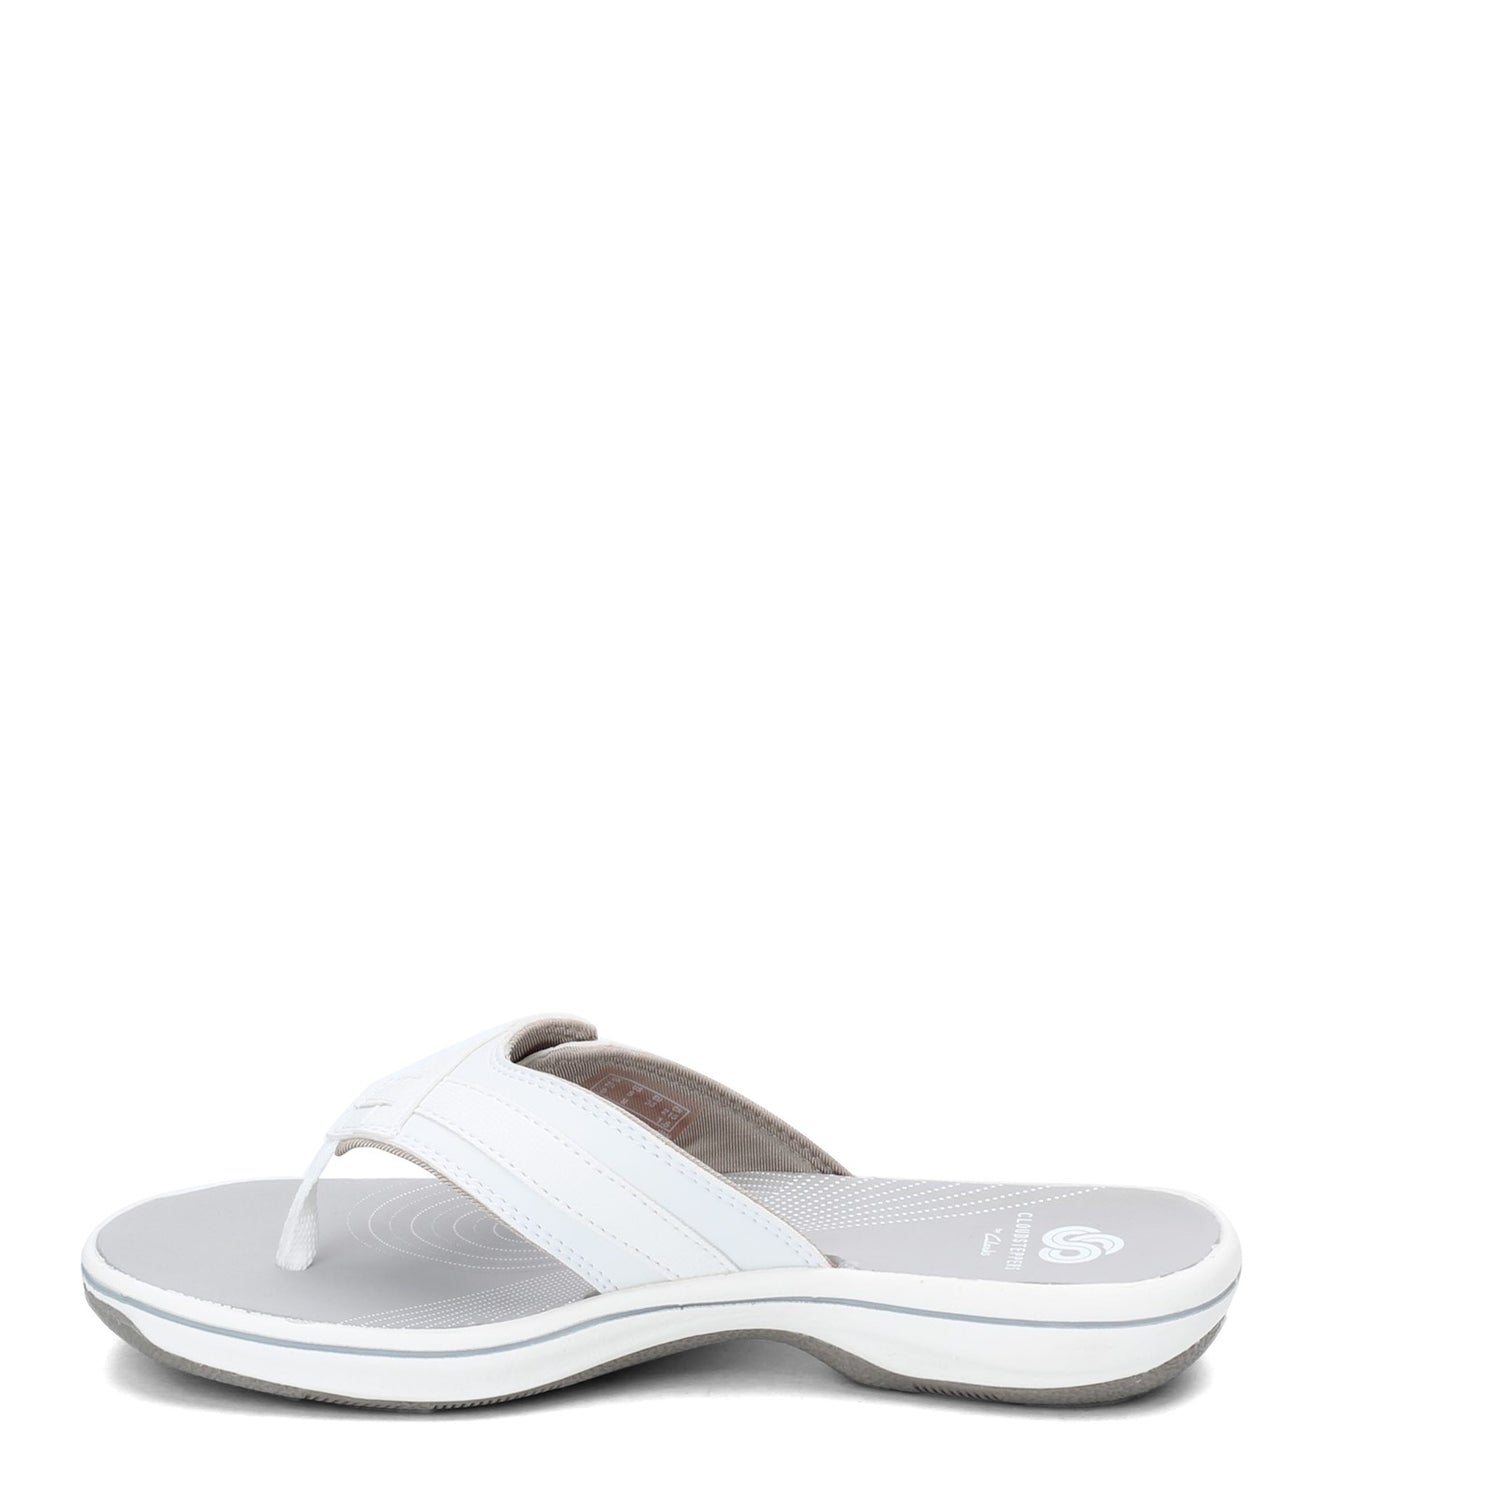 Peltz Shoes  Women's Clarks Breeze Sea Sandal WHITE 26125508